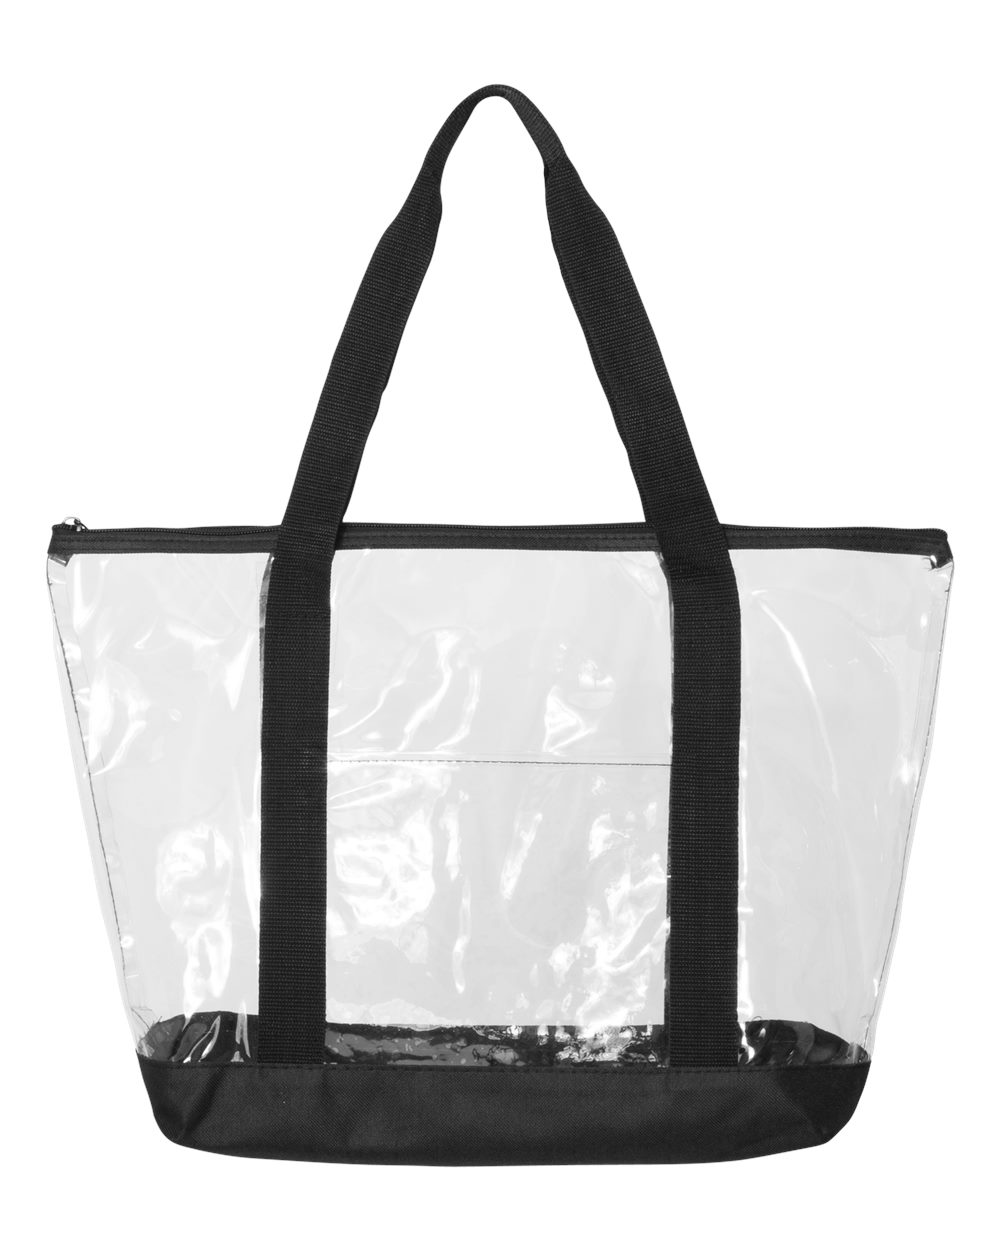 Liberty Bags 7009